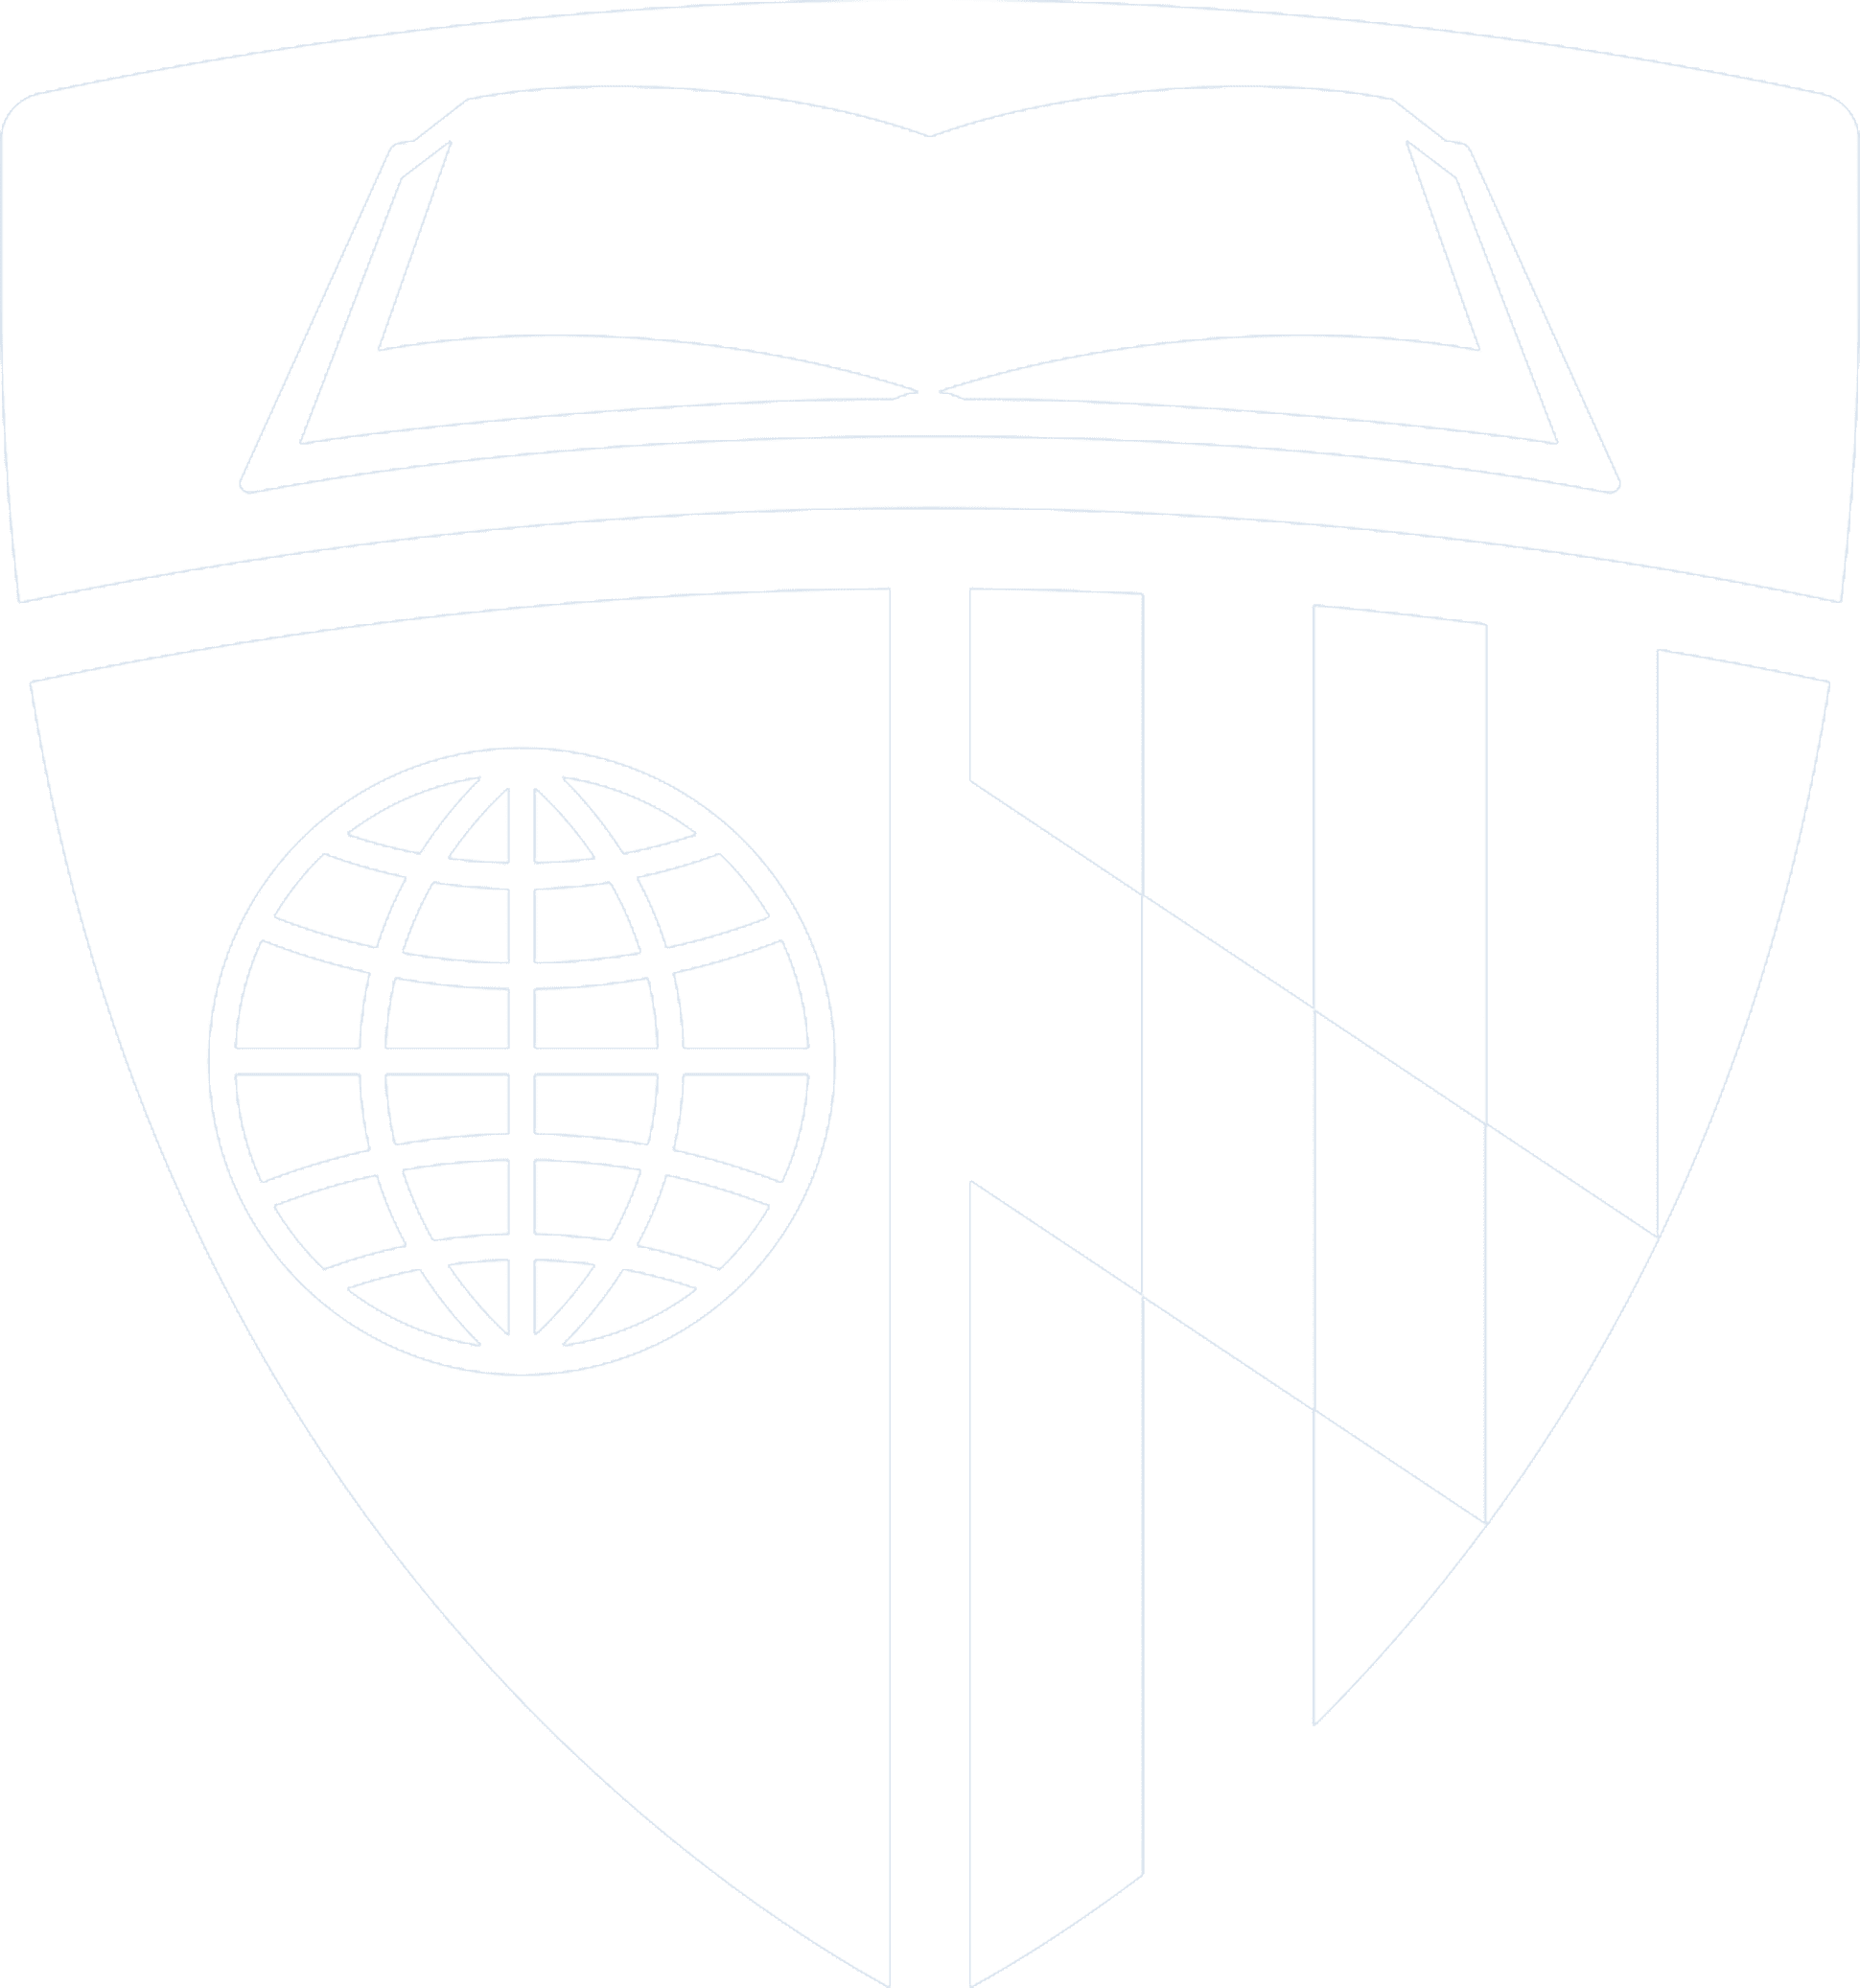 Johns Hopkins university logo